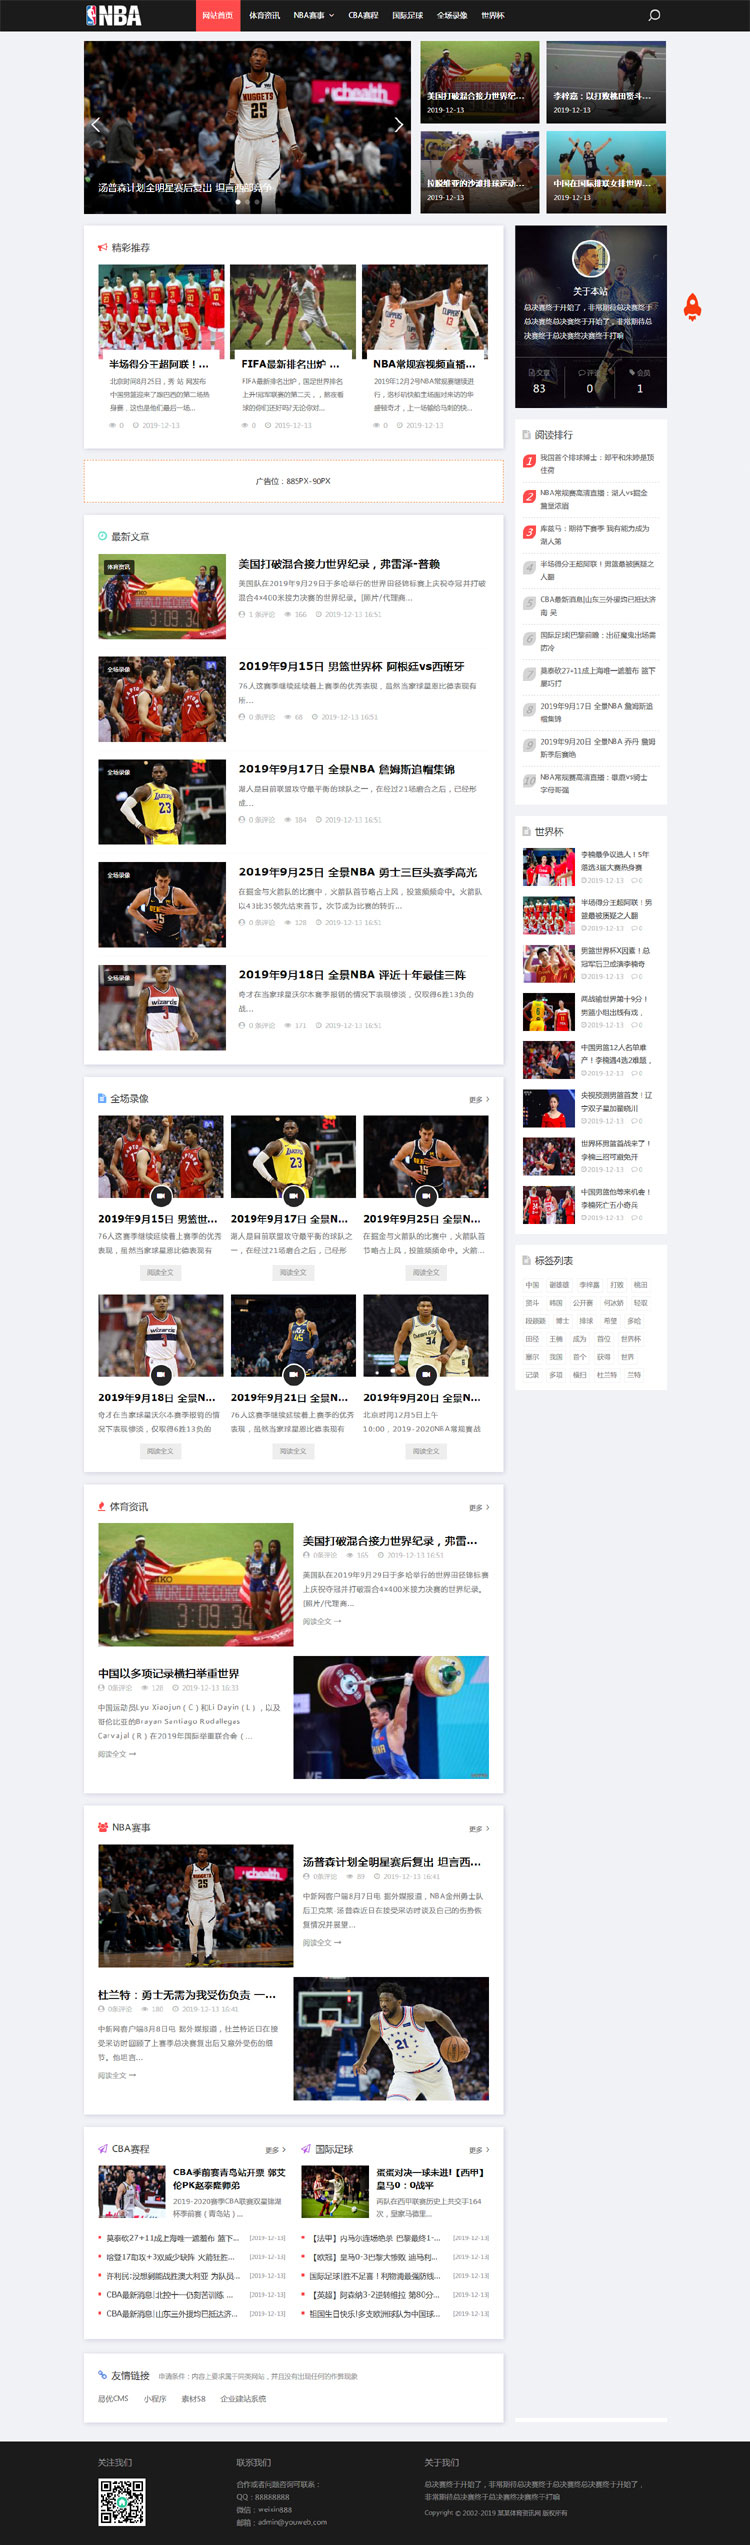 M090 html5网站NBA体育比赛体育资讯新闻资讯blog类织梦模板dede模版下载[带手机版]